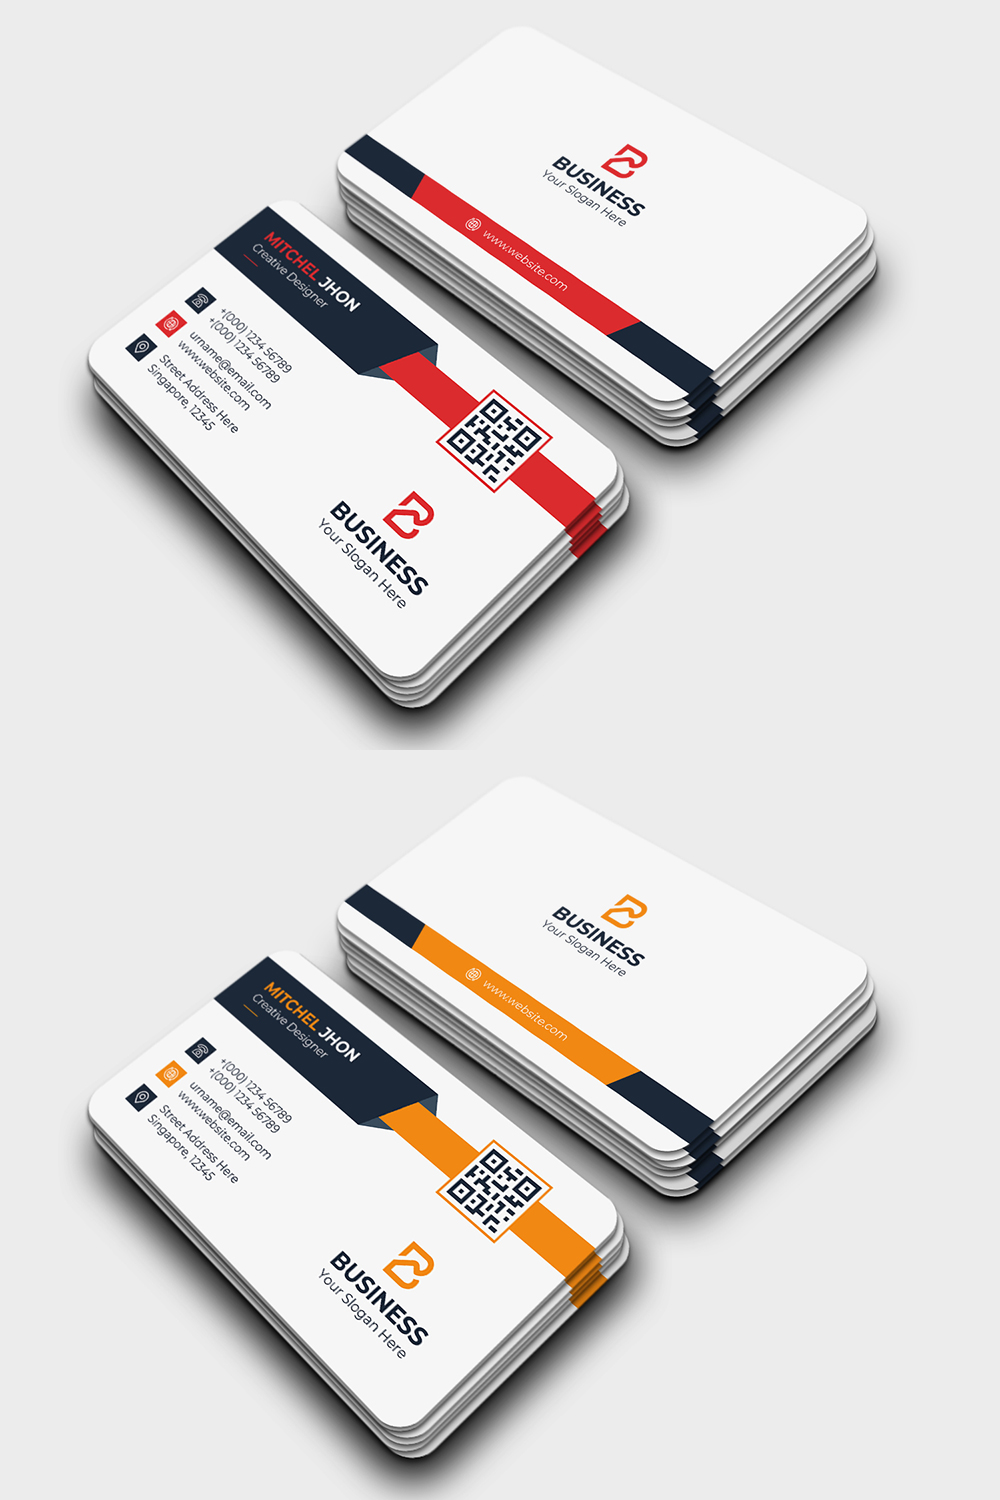 Modern business cards design.